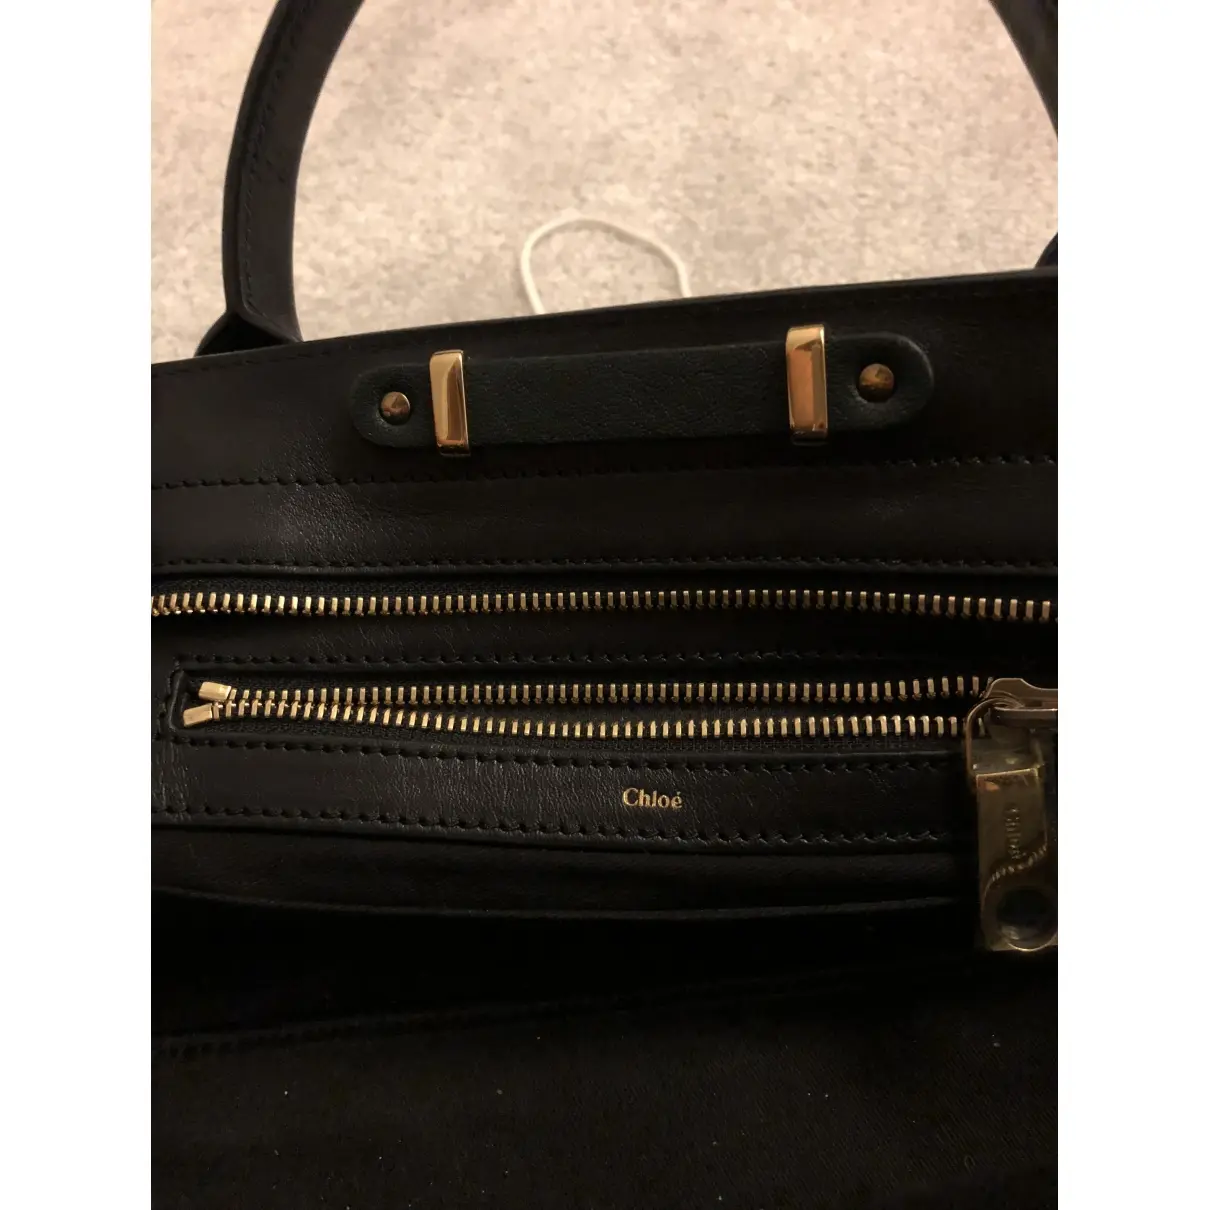 Buy Chloé Alice leather handbag online